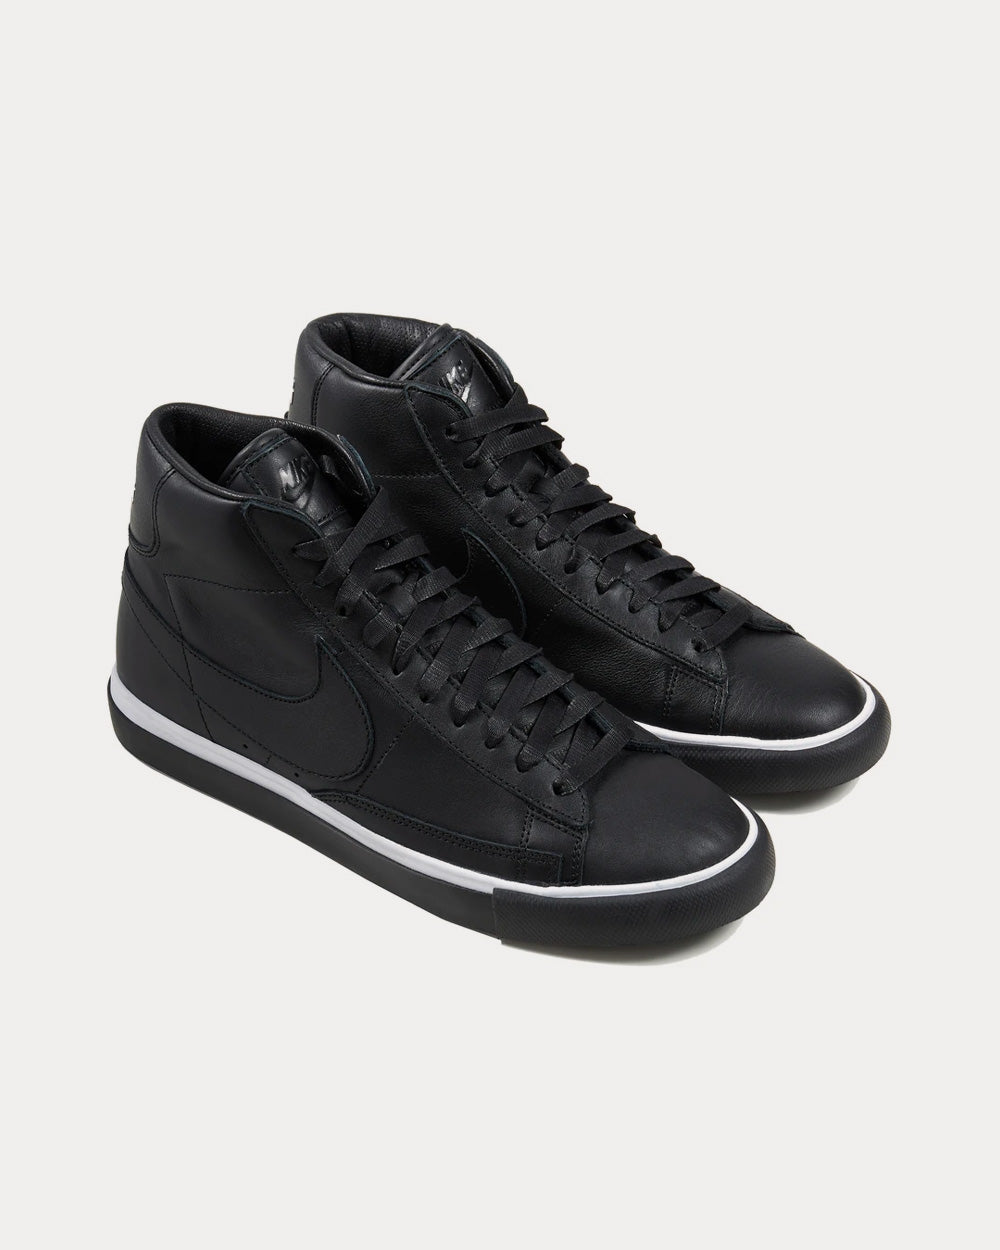 Nike x Comme des Garçons - Blazer Black High Top Sneakers